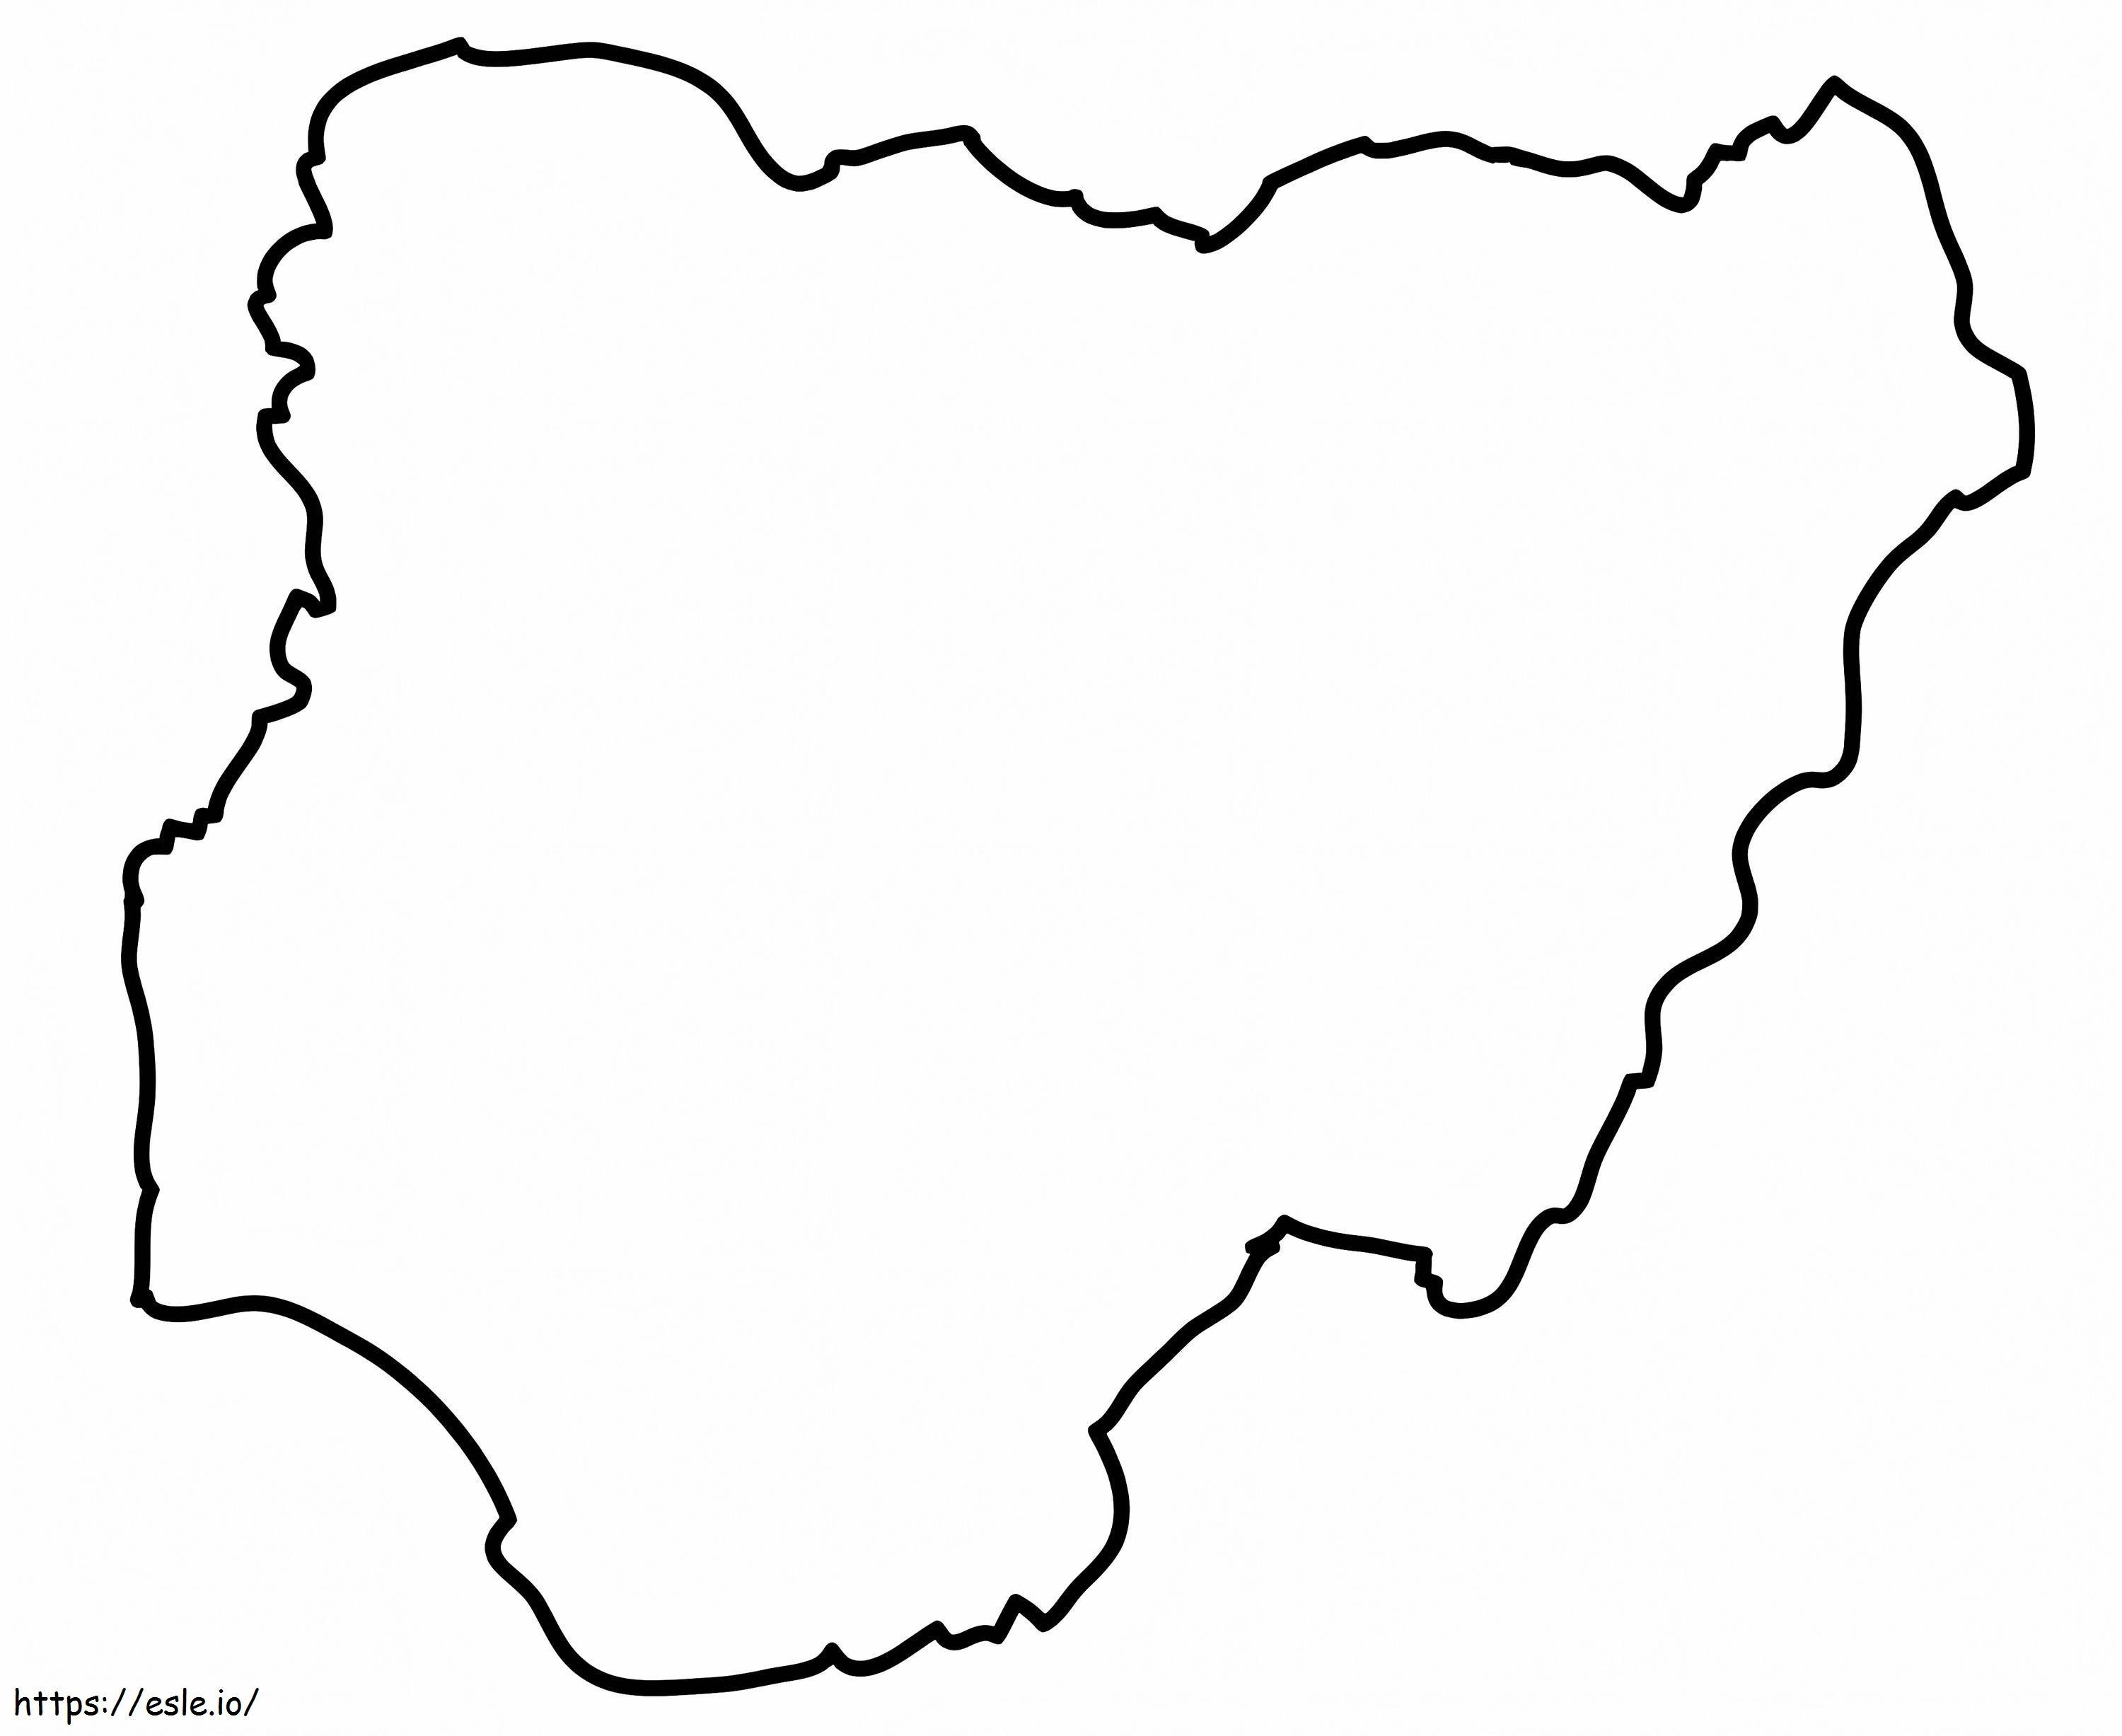 Coloriage Carte du Nigéria à imprimer dessin